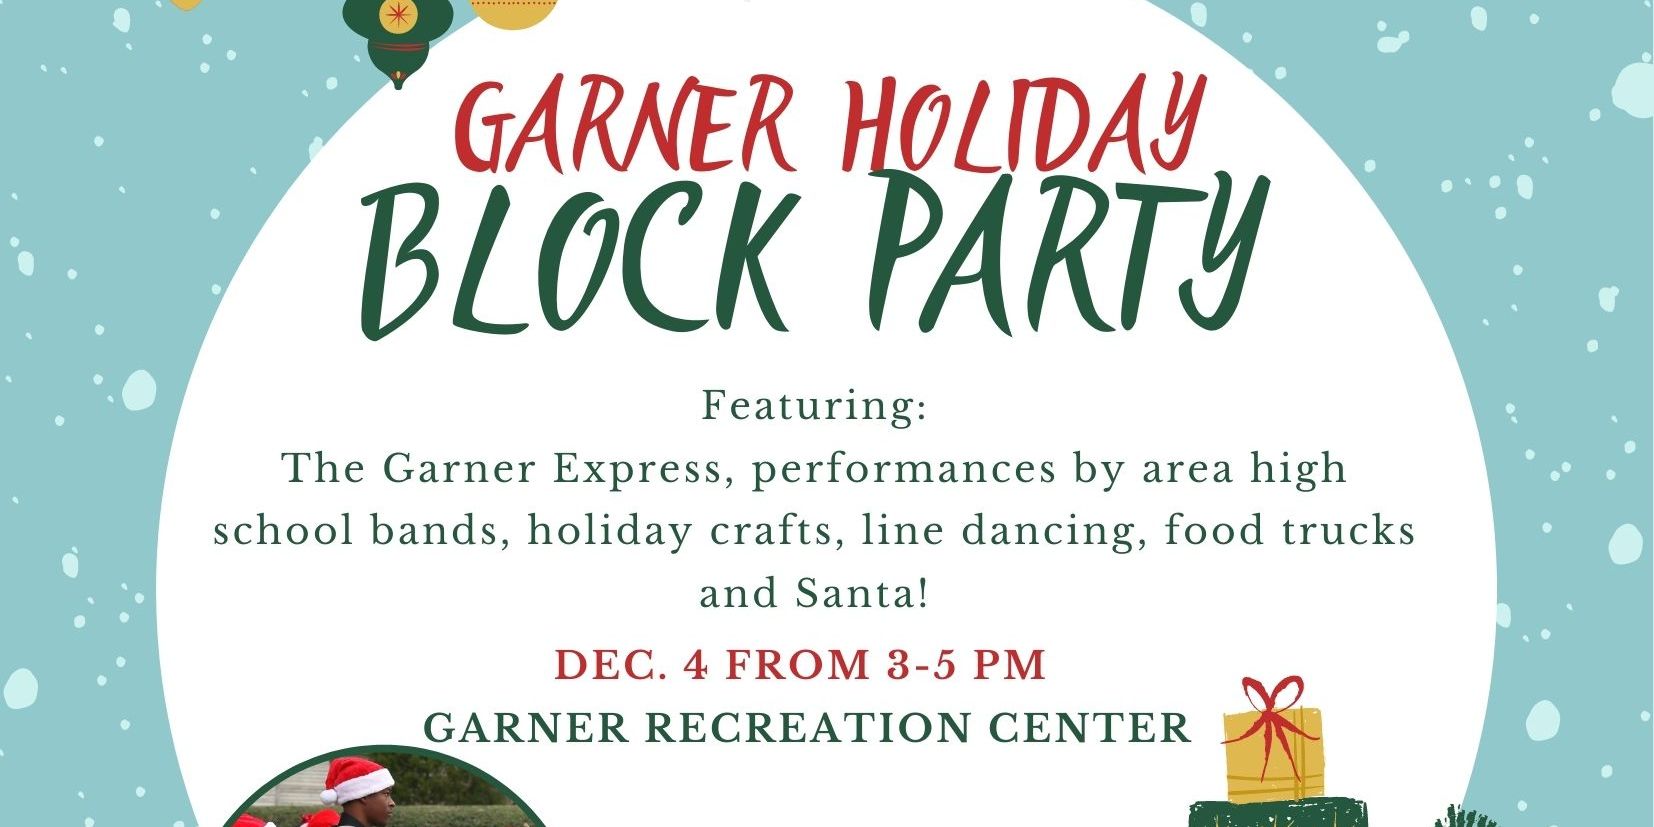 Garner Holiday Block Party promotional image